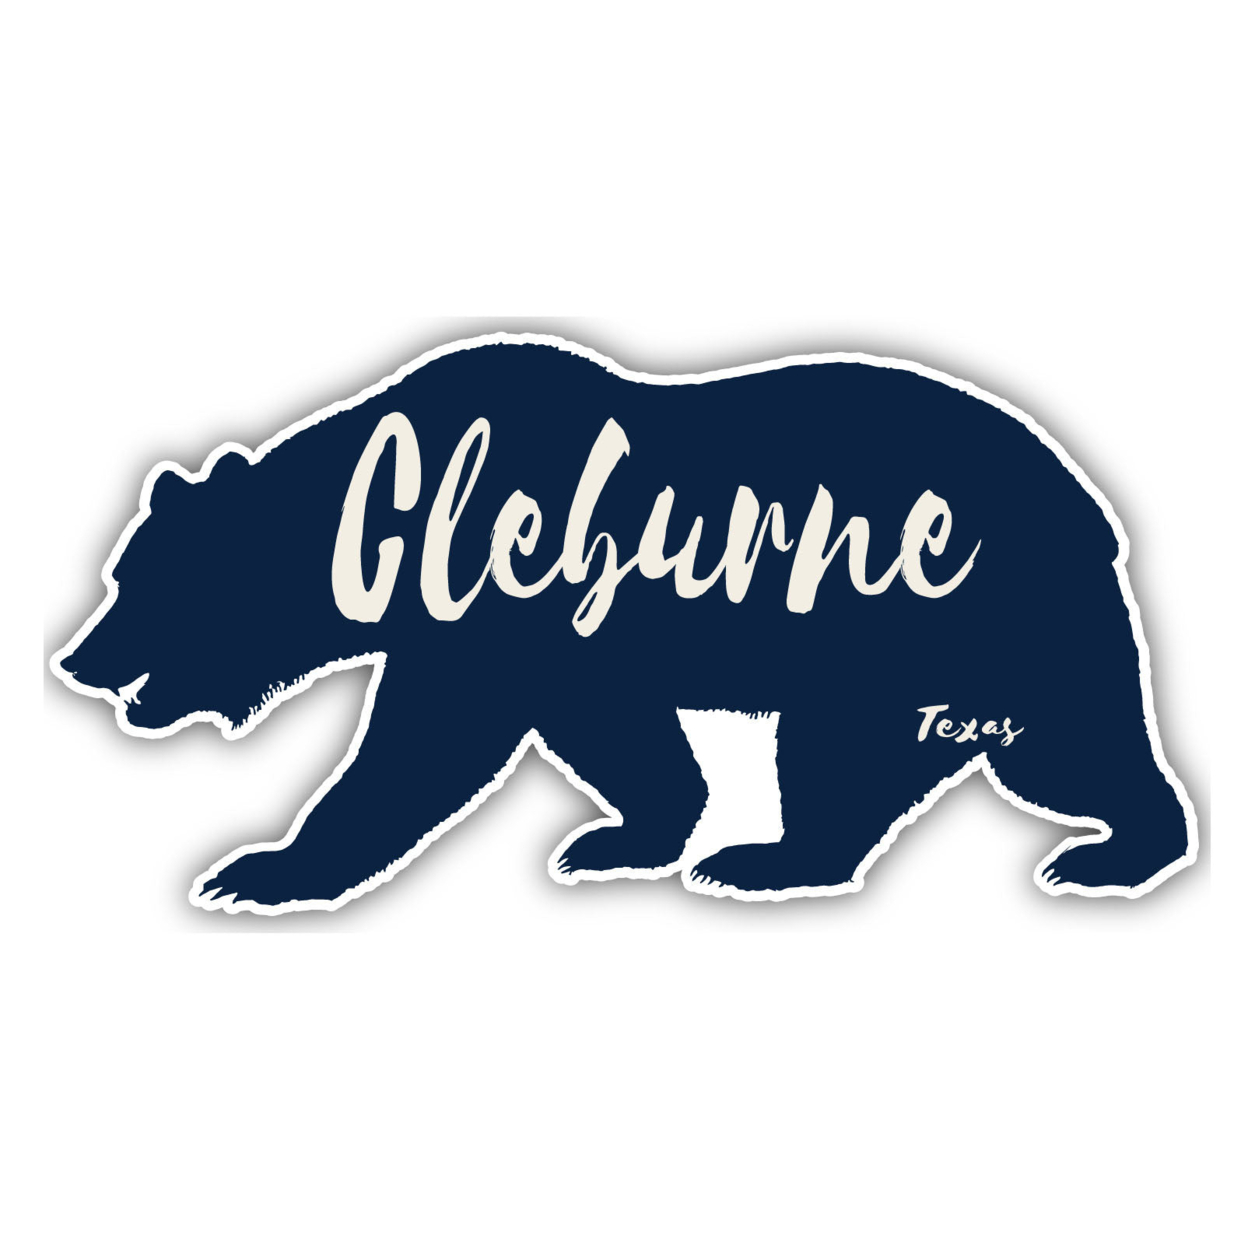 Cleburne Texas Souvenir Decorative Stickers (Choose Theme And Size) - Single Unit, 12-Inch, Bear